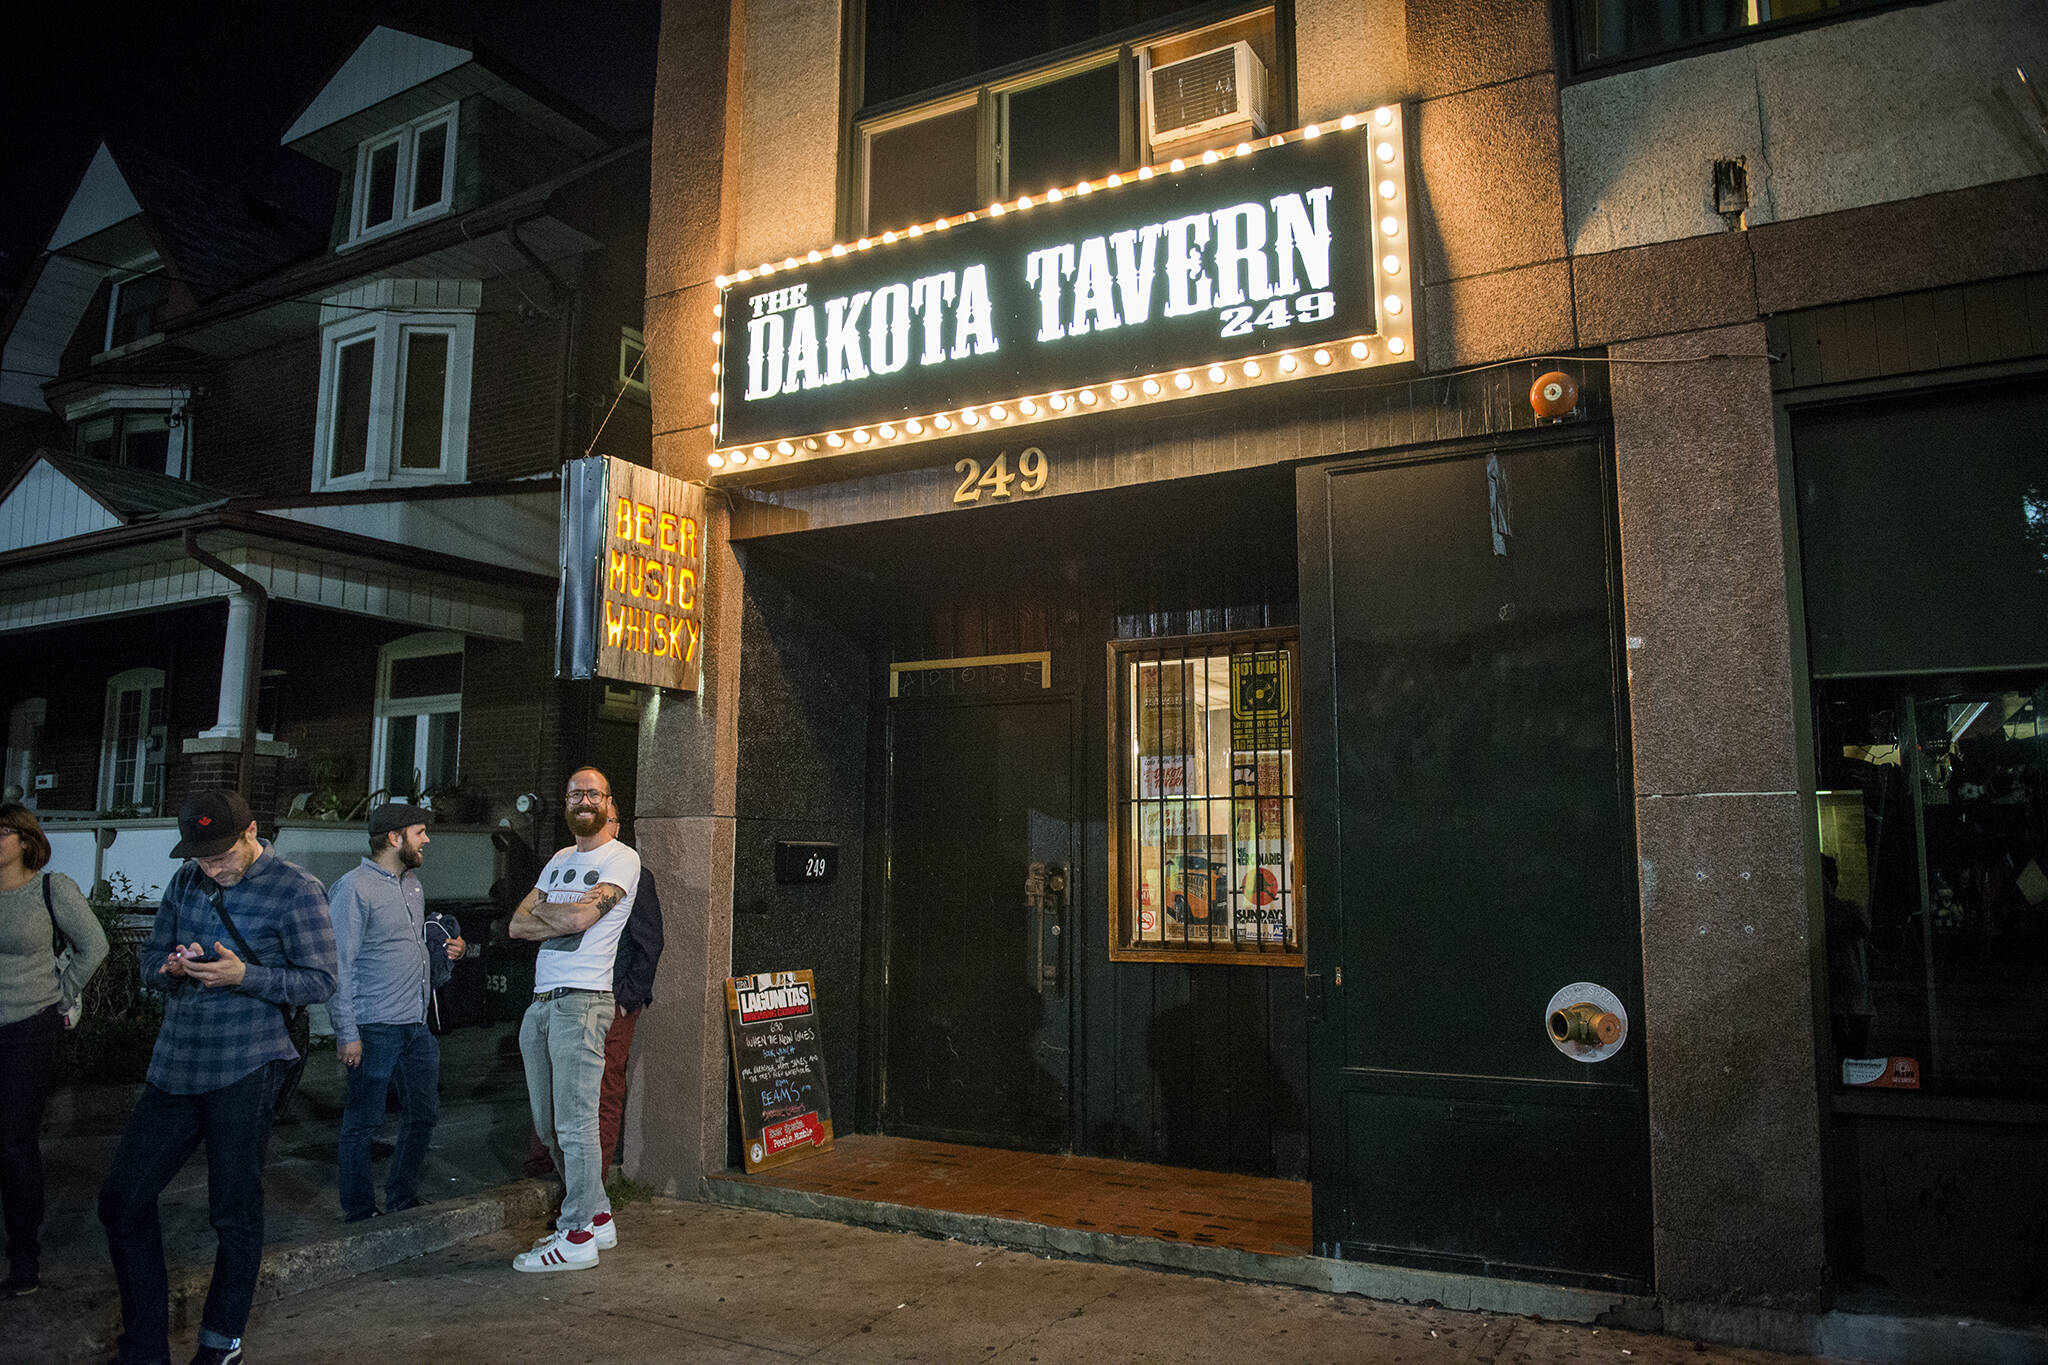 the dakota tavern